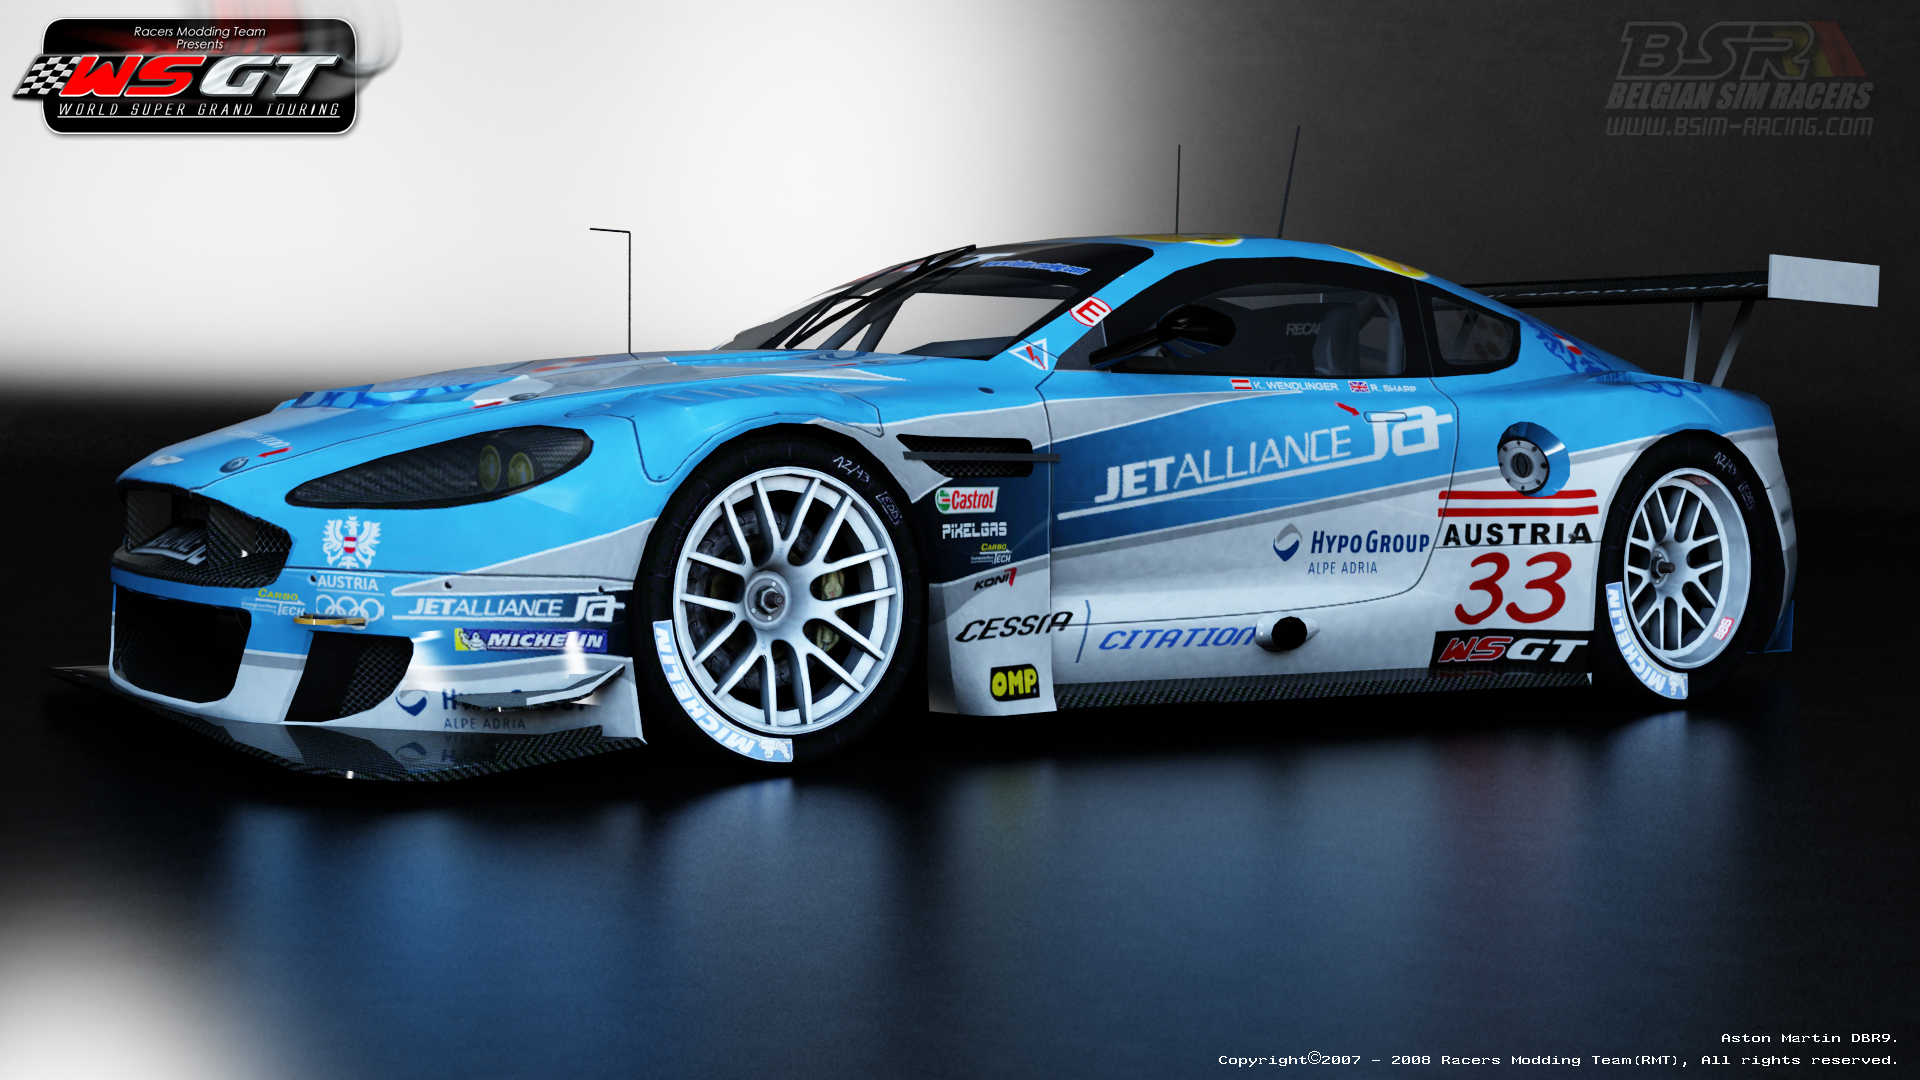 World Super GT Mod - Two New Wallpapers | VirtualR - Sim Racing News